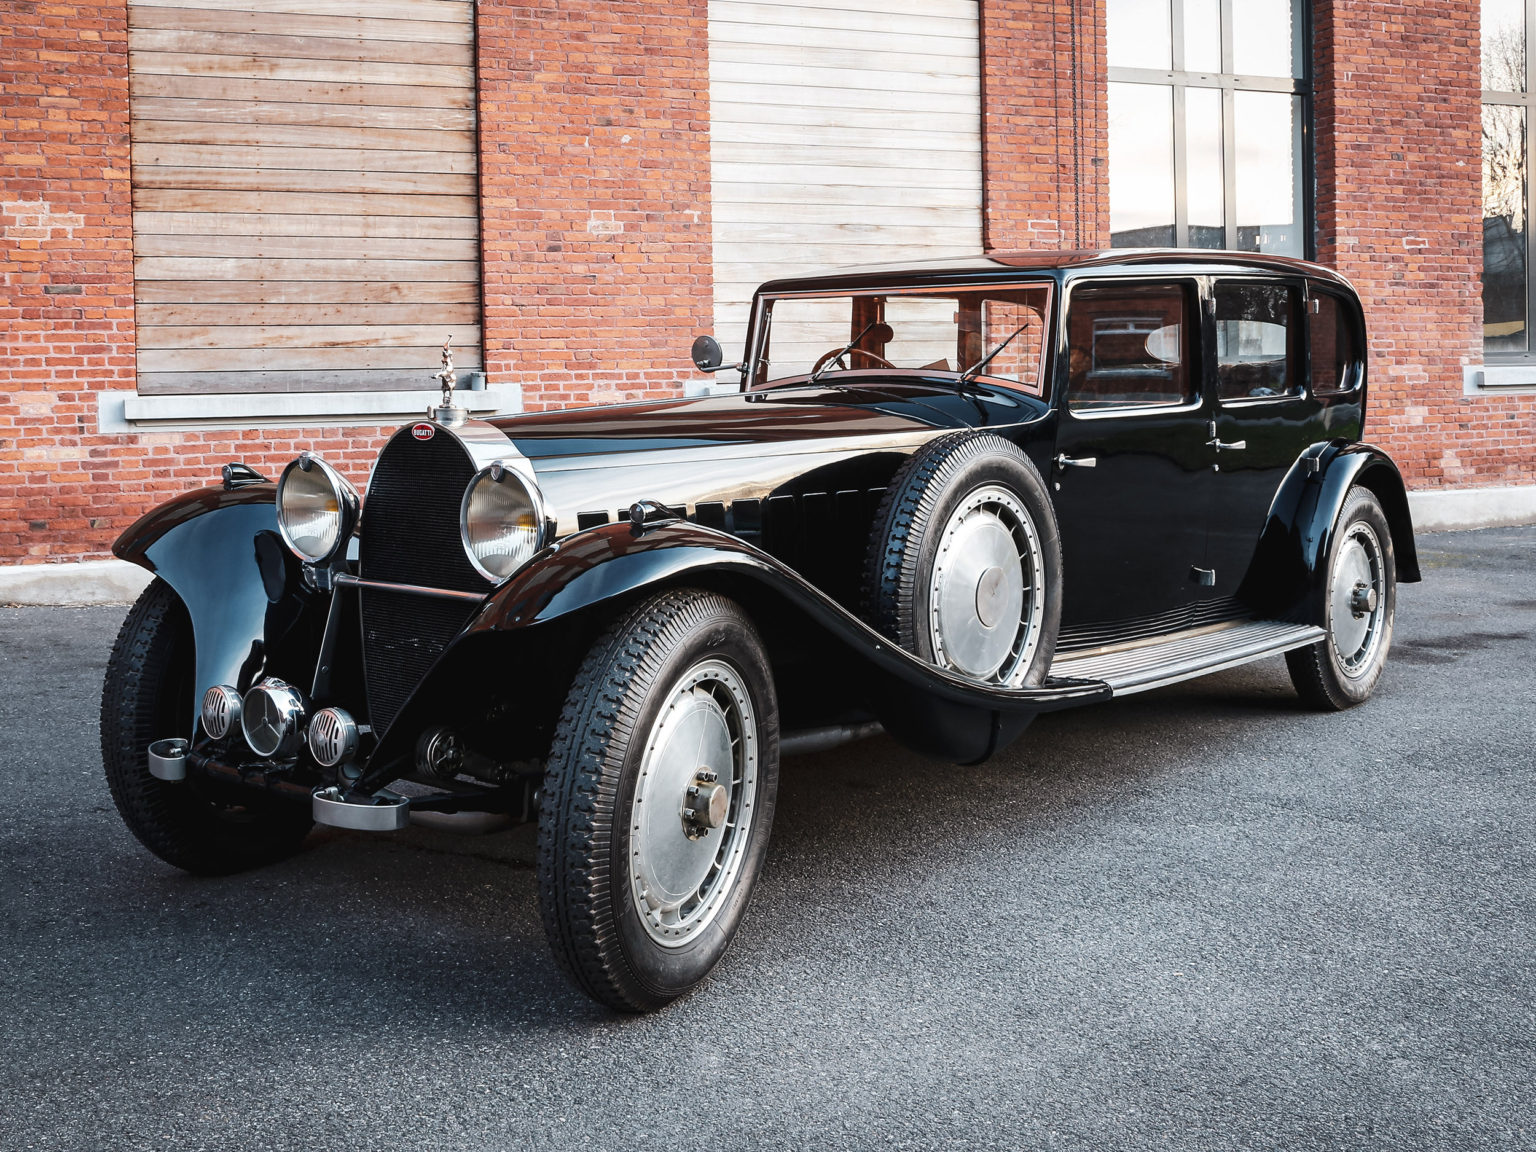 Bugatti Type 41 Royale Park Ward on display at Cité de l"Automobile national museum in Mullhouse.